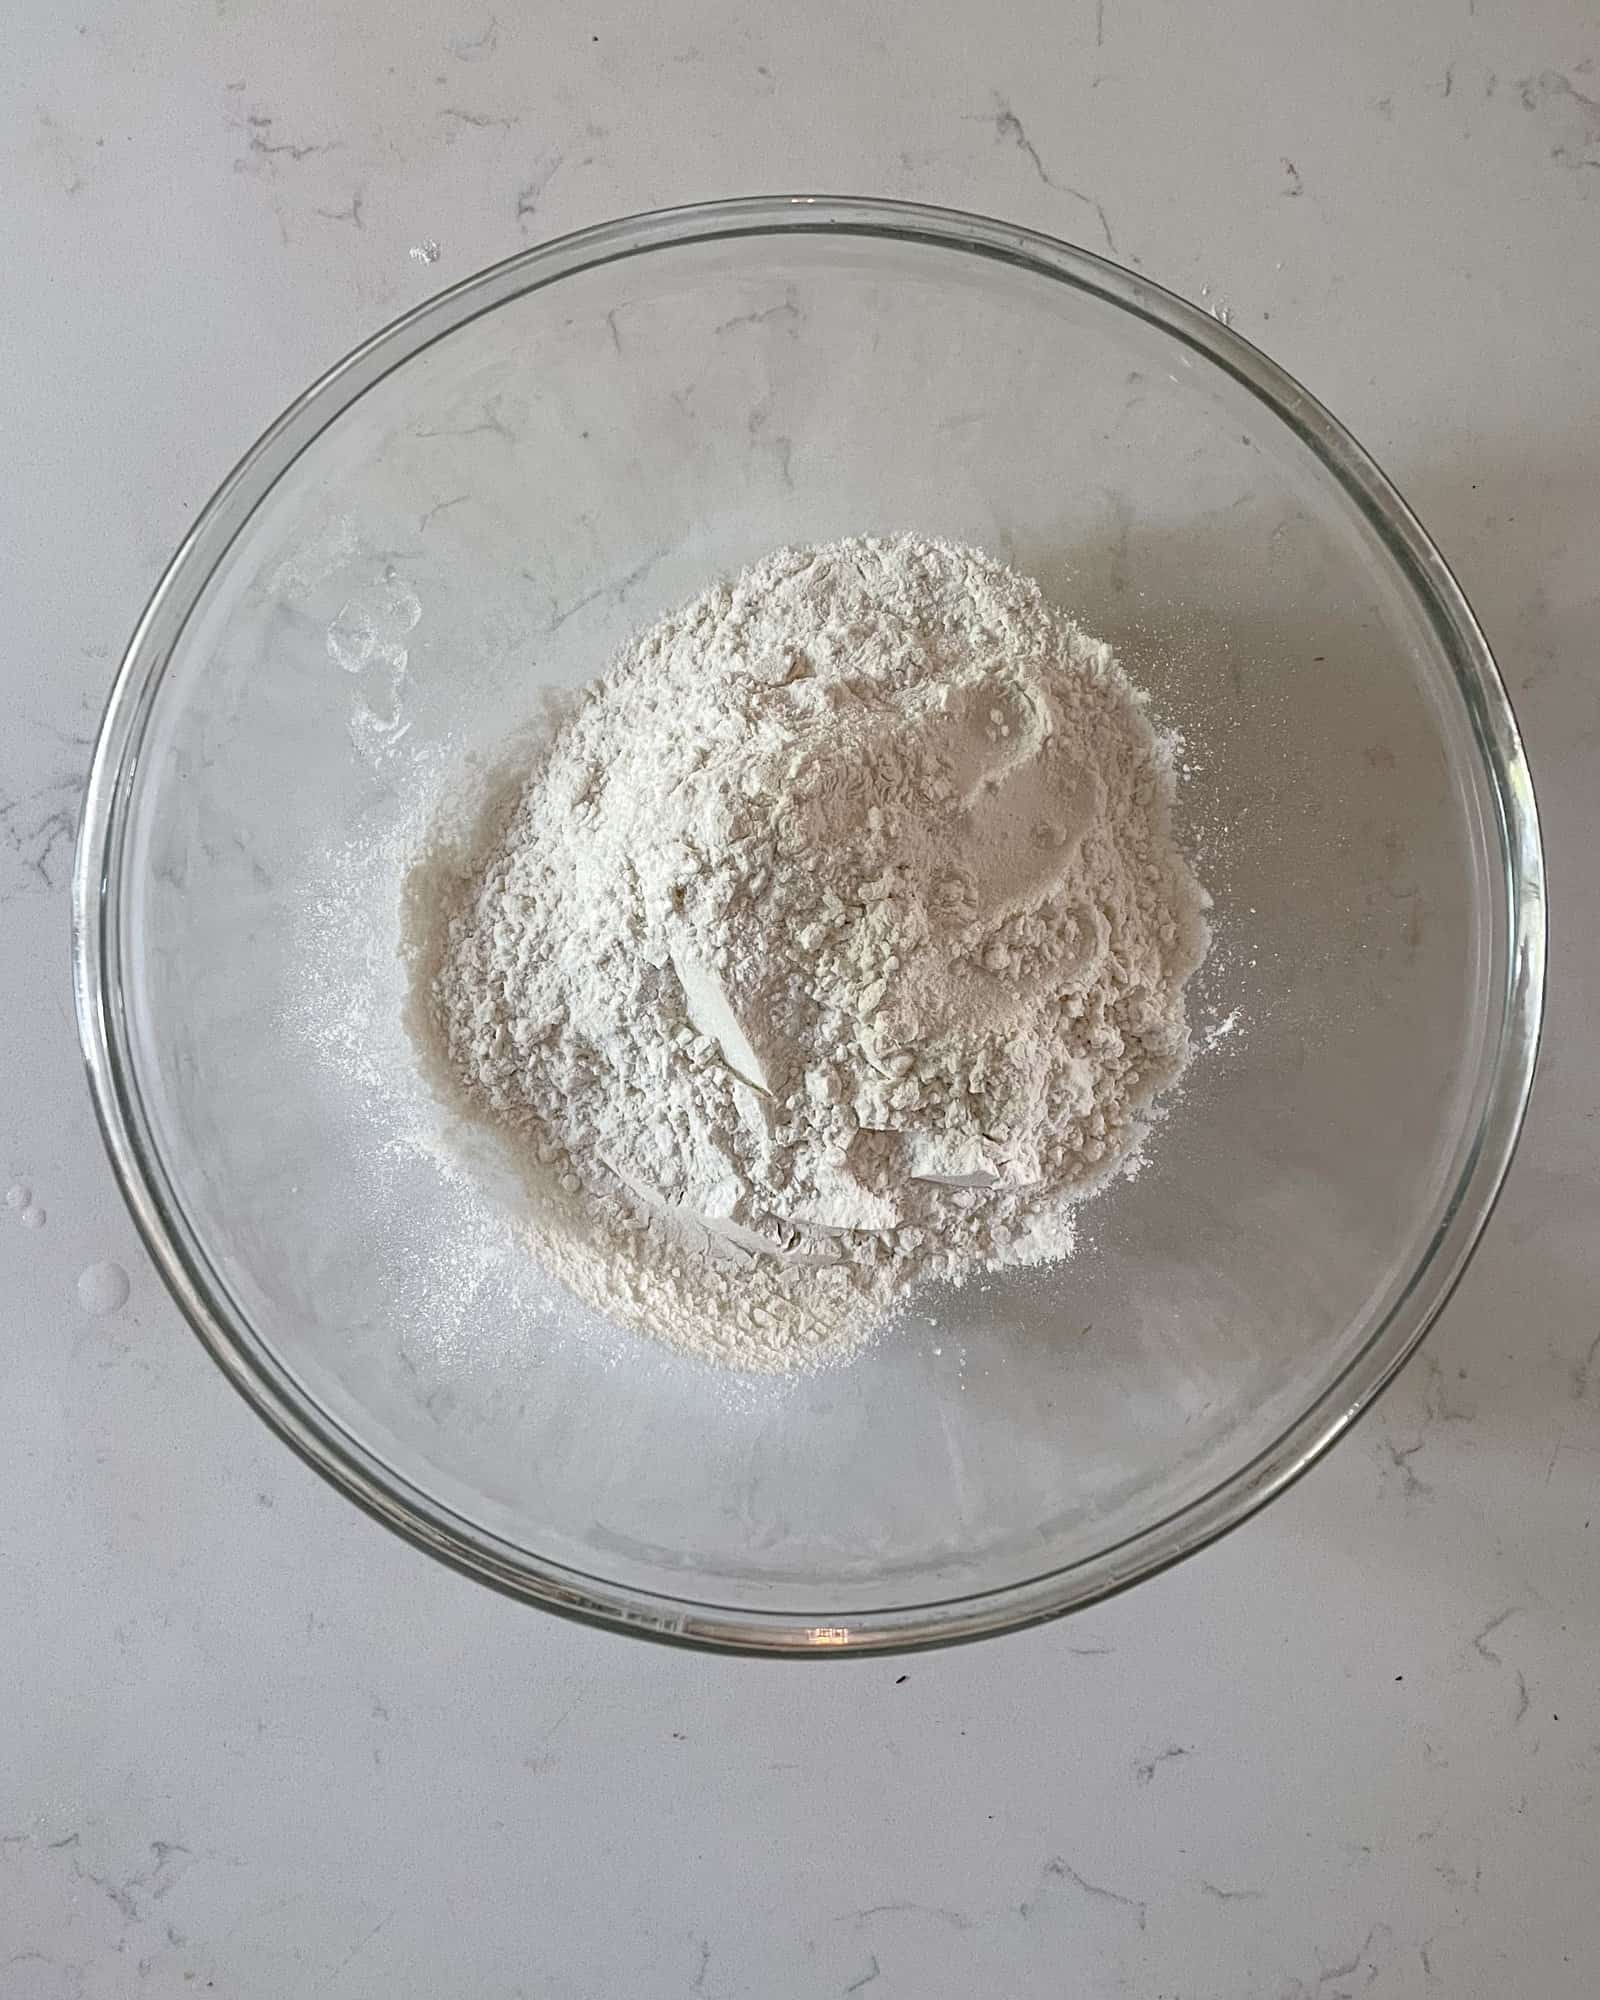 heat treated flour in a bowl.